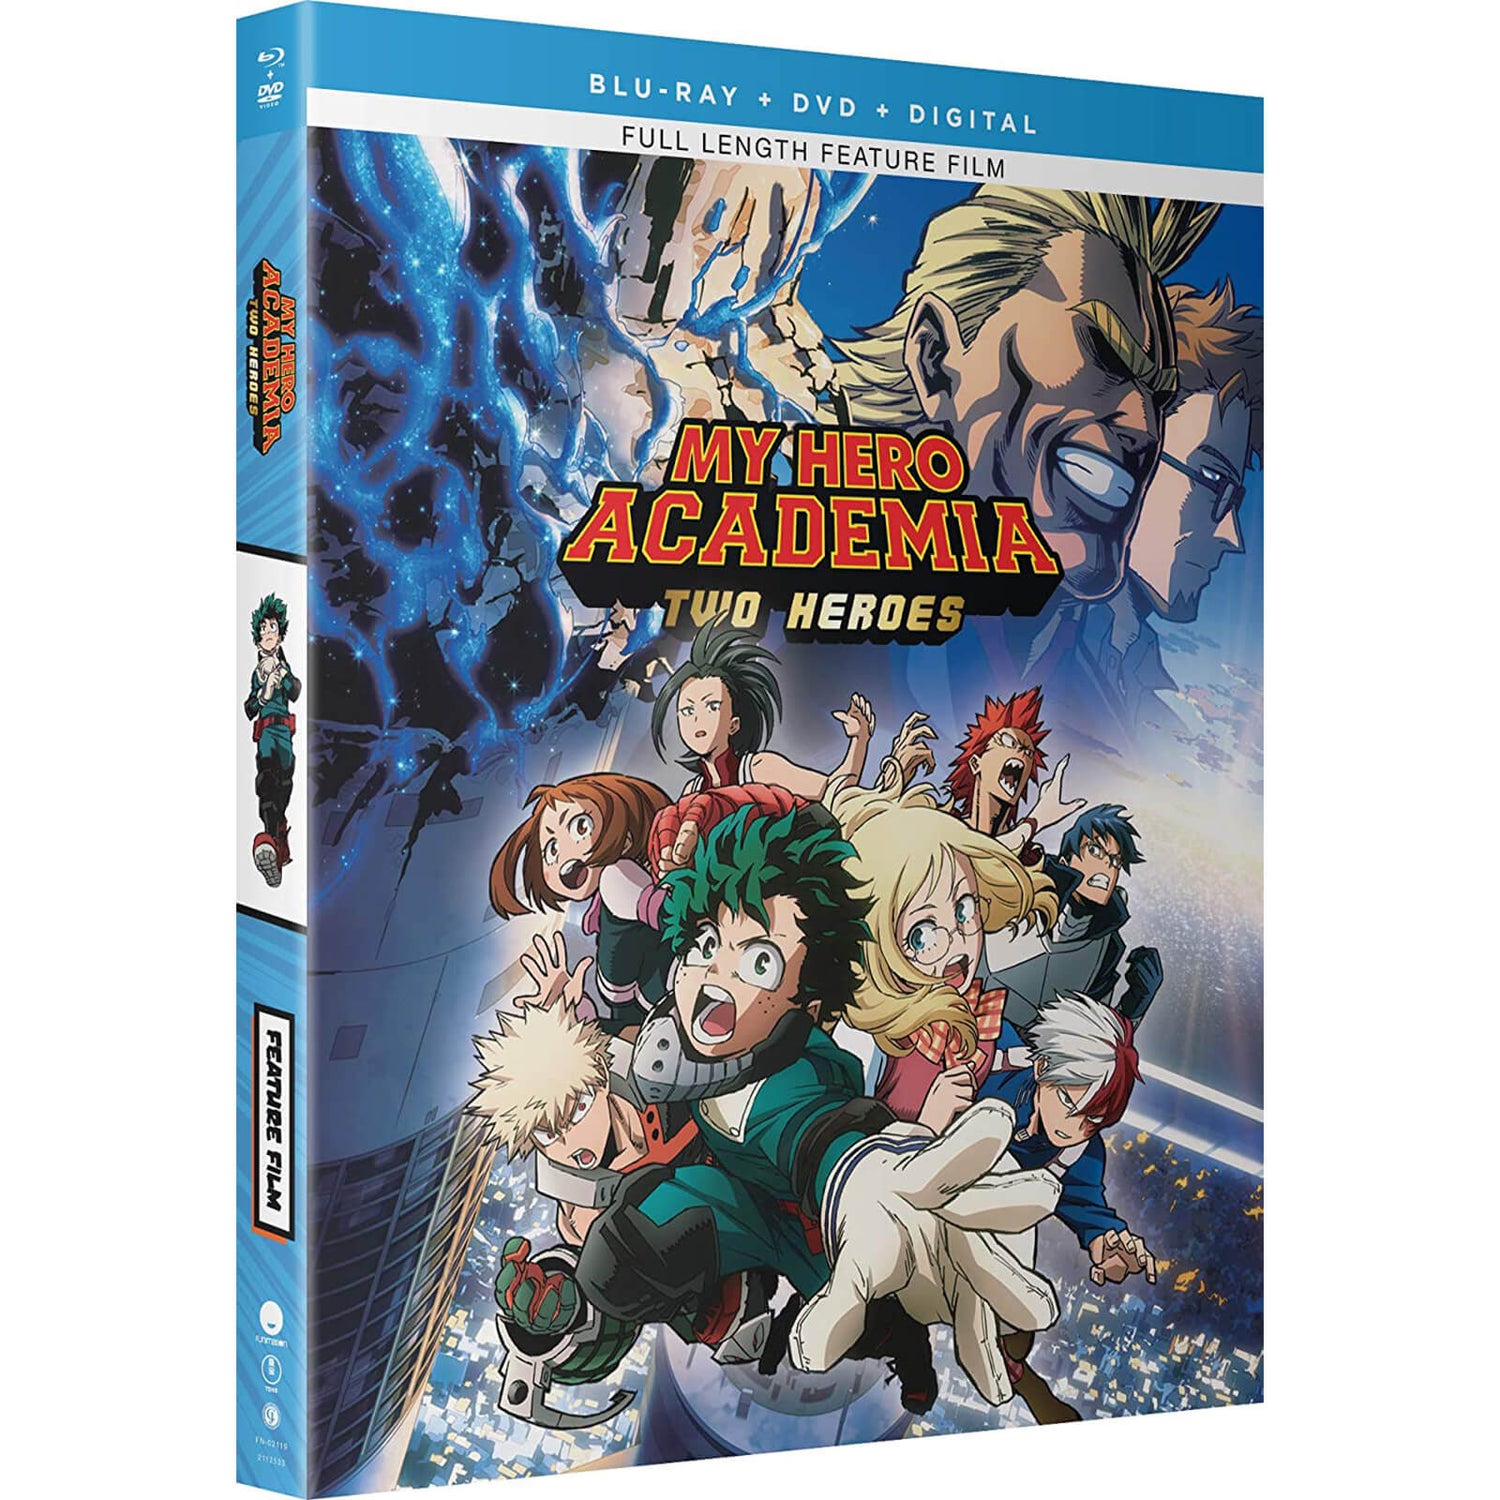 My Hero Academia: Two Heroes (Includes DVD + Digital)